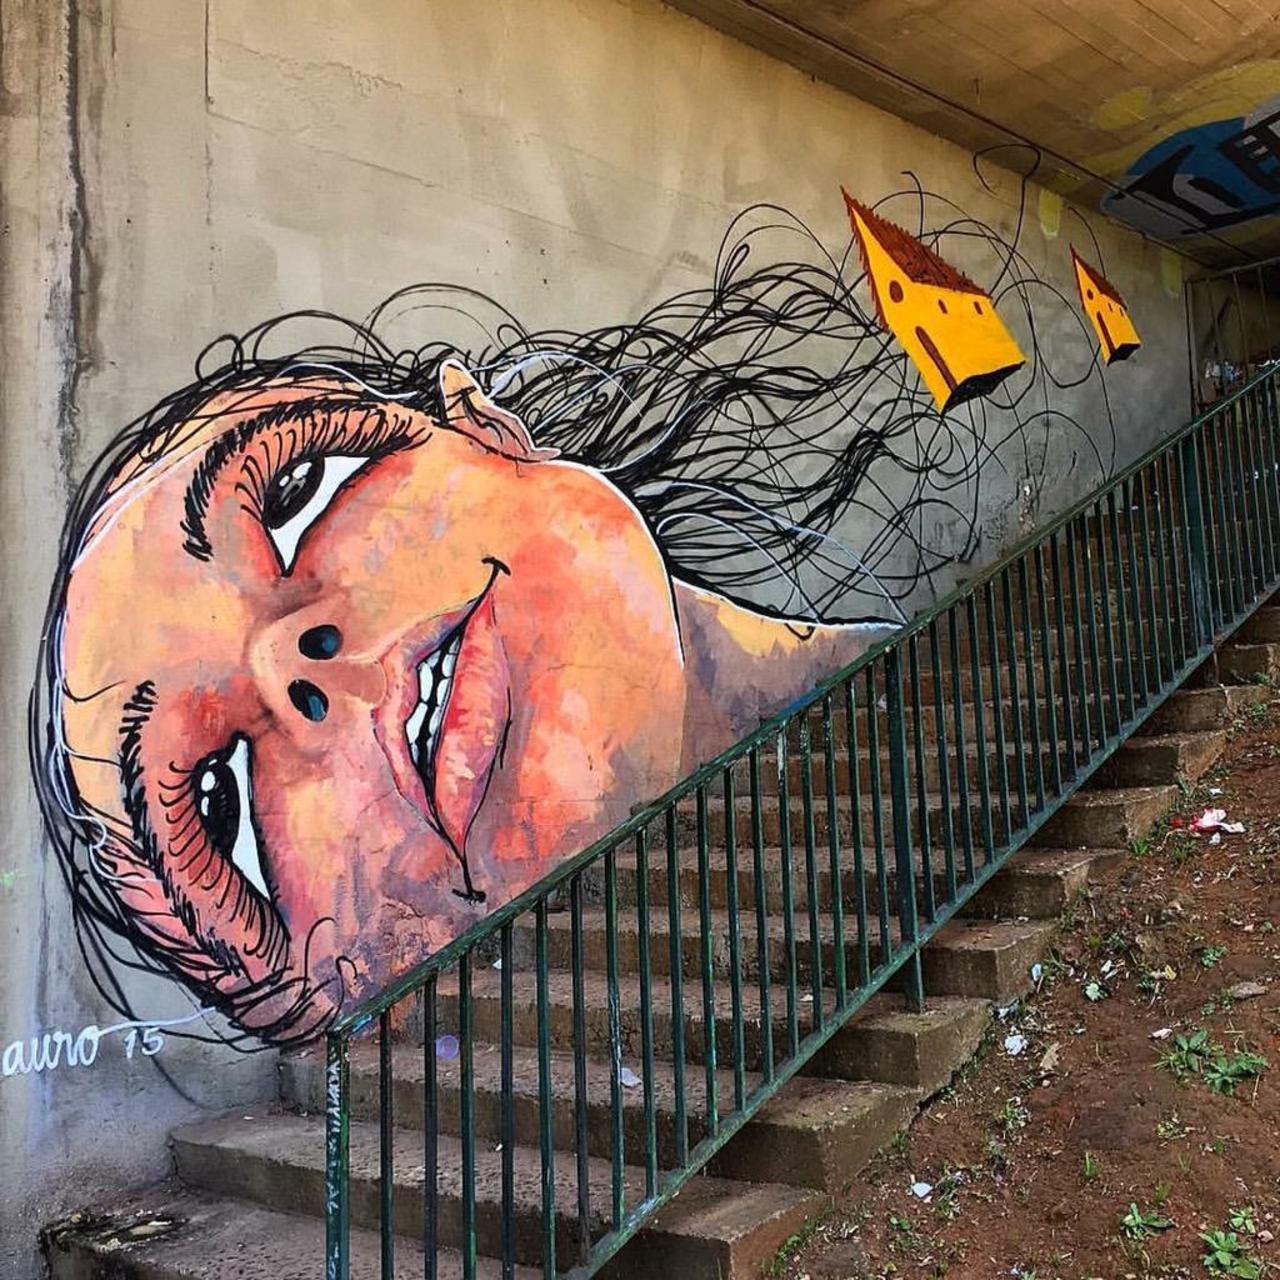 Street Art by Reveracidade in São Paulo 

#art #graffiti #mural #streetart http://t.co/HMmFjZp4Bx